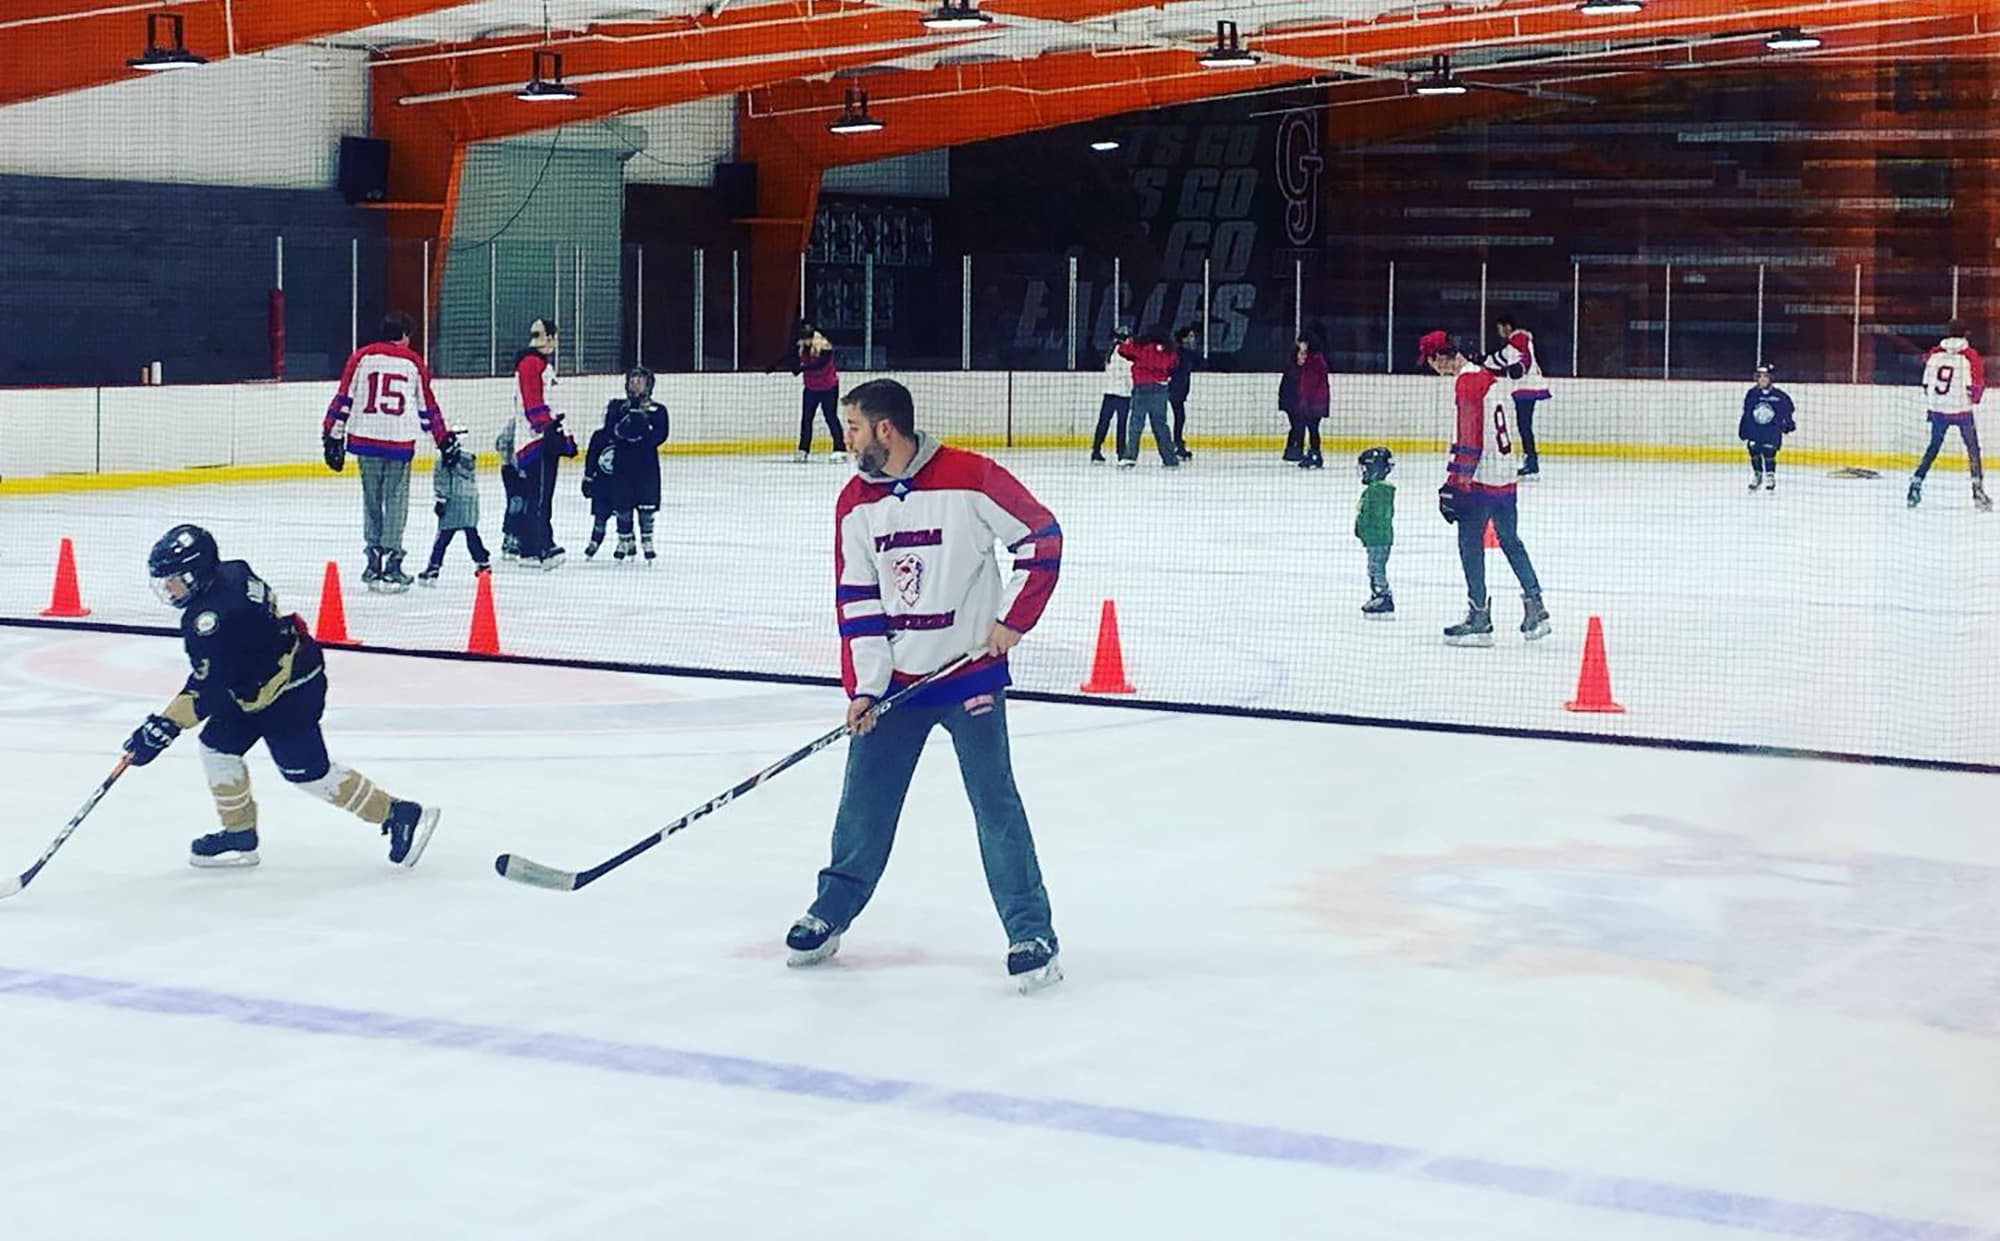 kids hockey practice at Lakeland Ice Arena